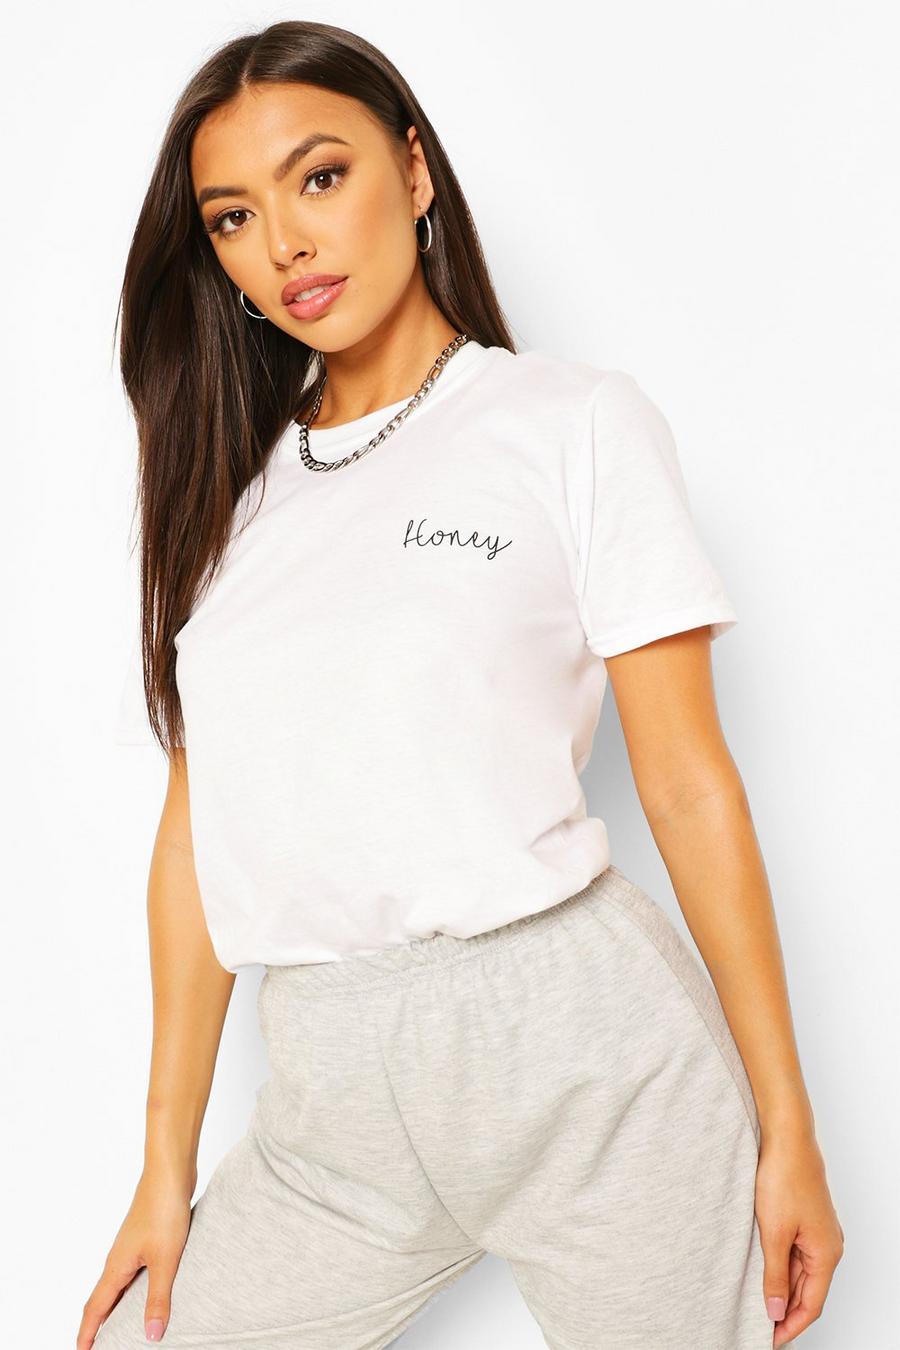 Petite T-Shirt mit Honey-Slogan, Weiß white image number 1